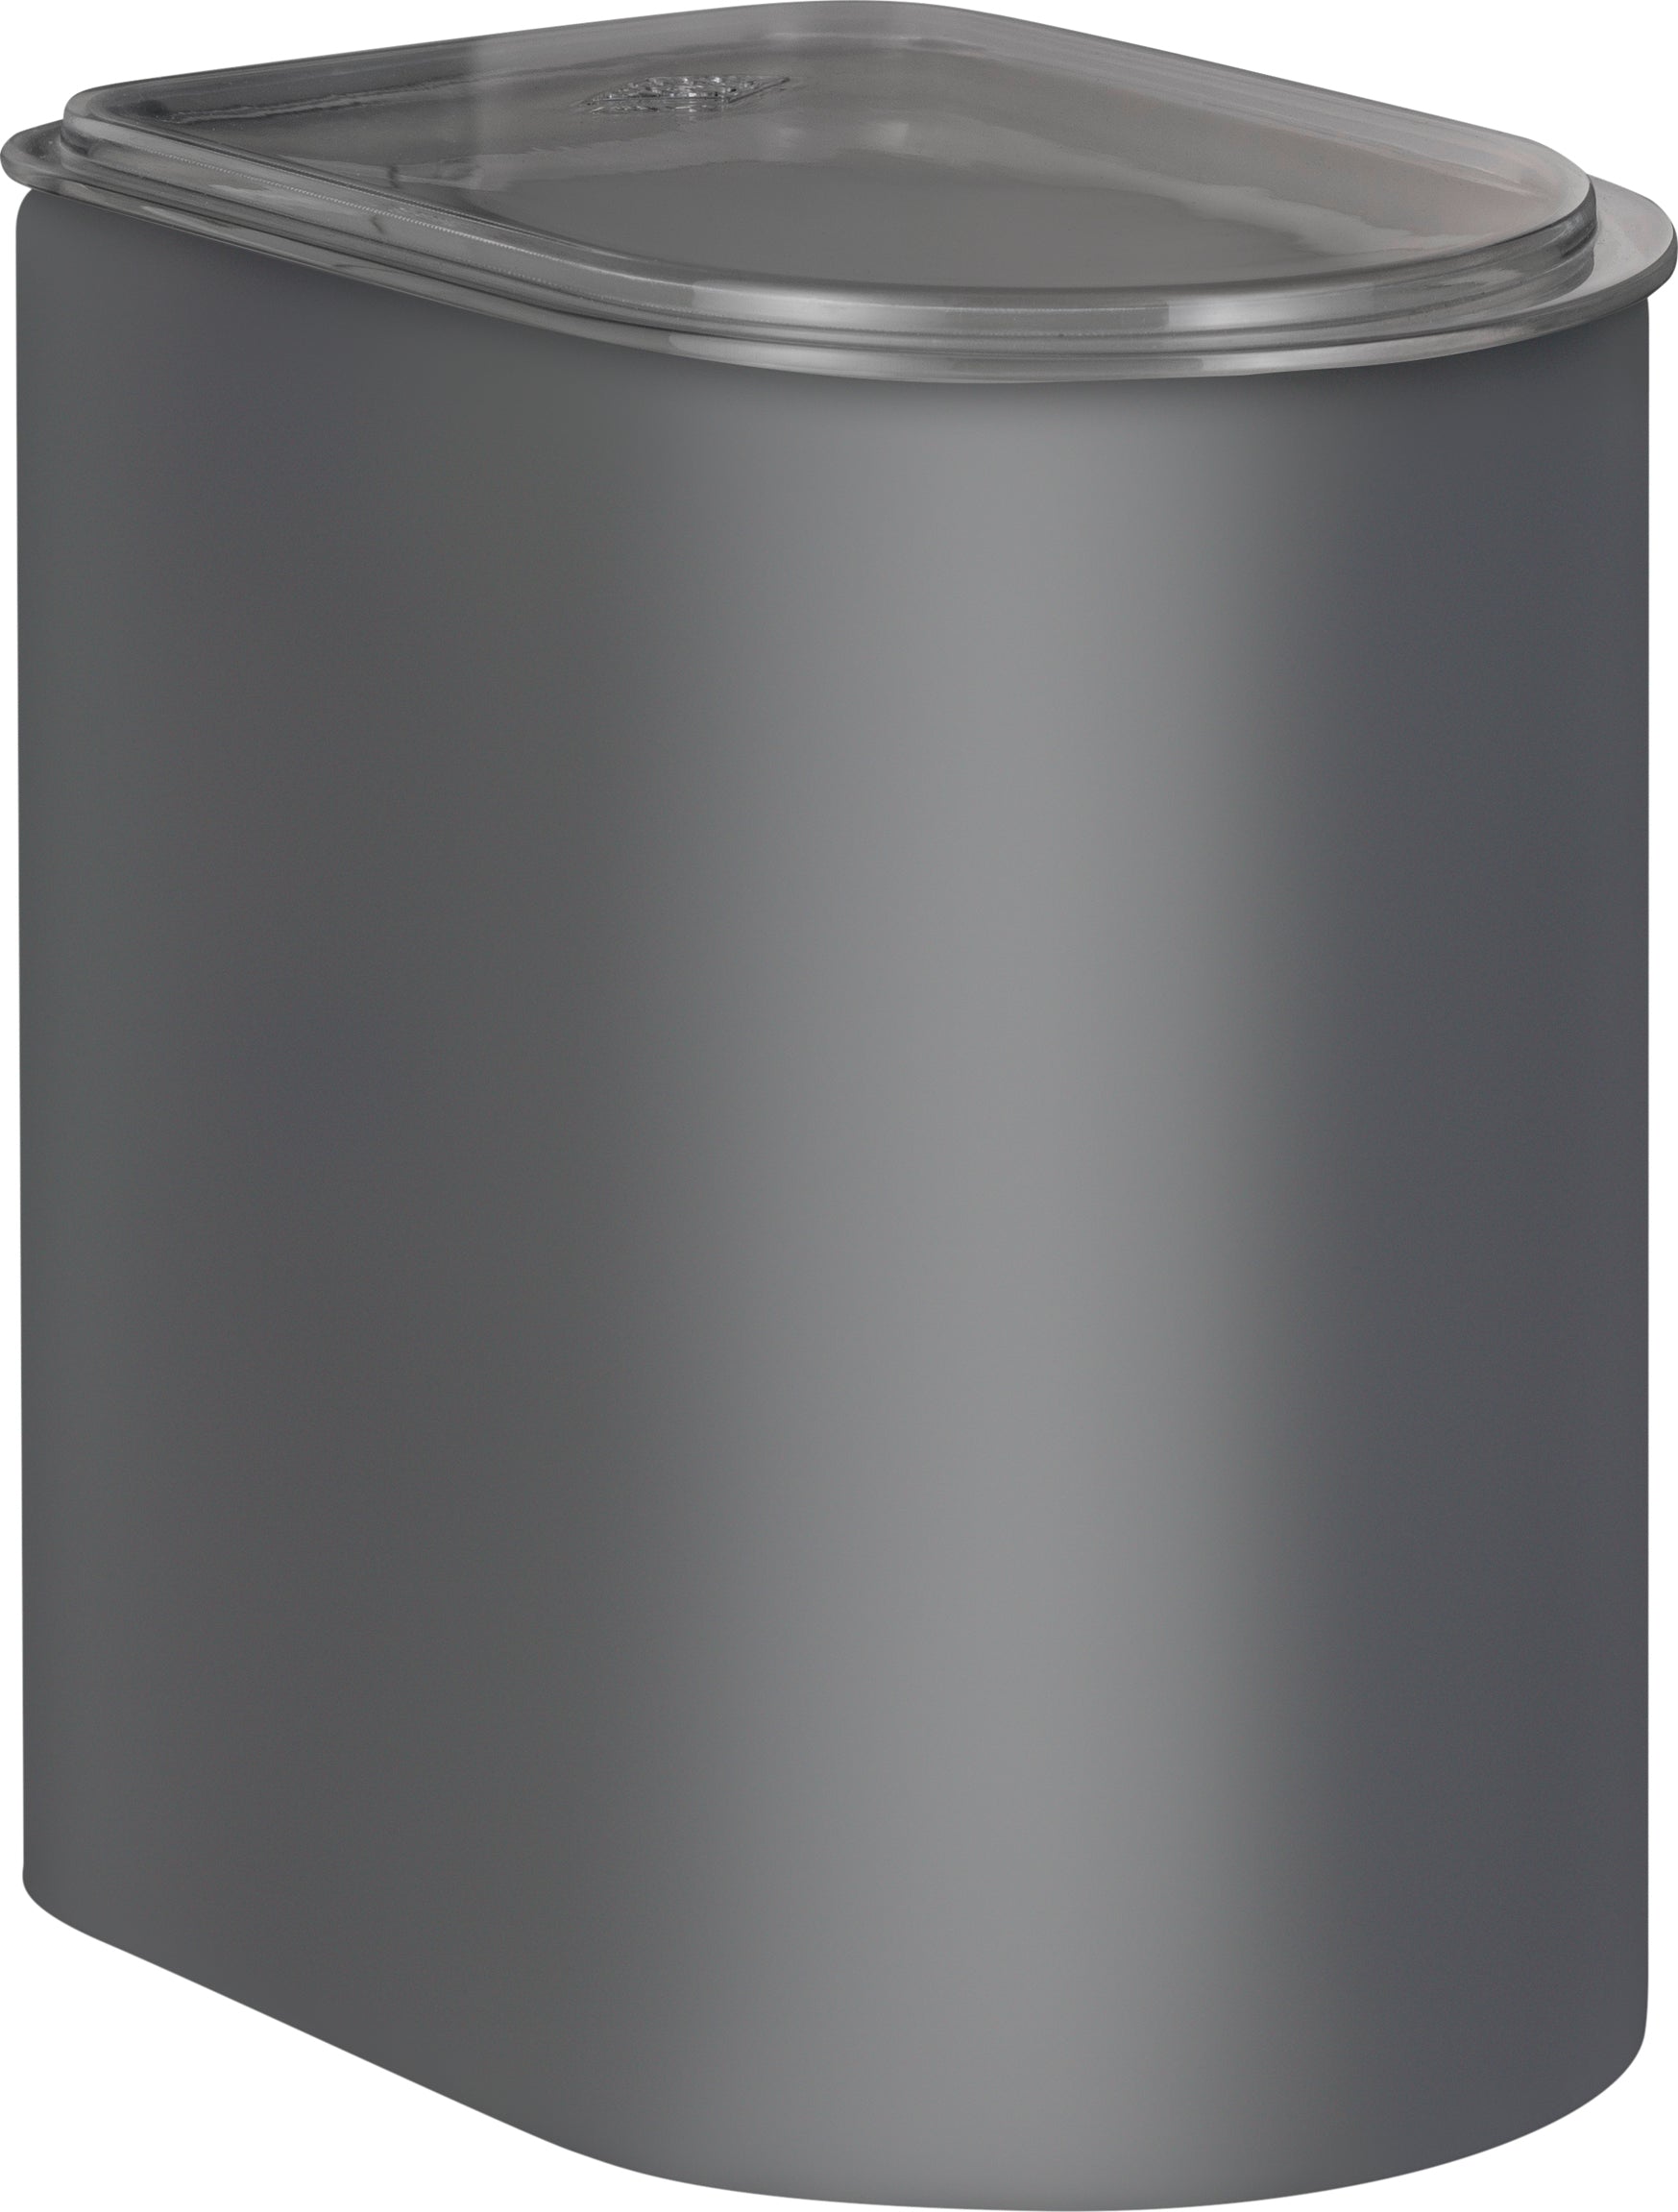 Wesco Kanister 2,2 Liter mit Acryldeckel, Graphit Matt